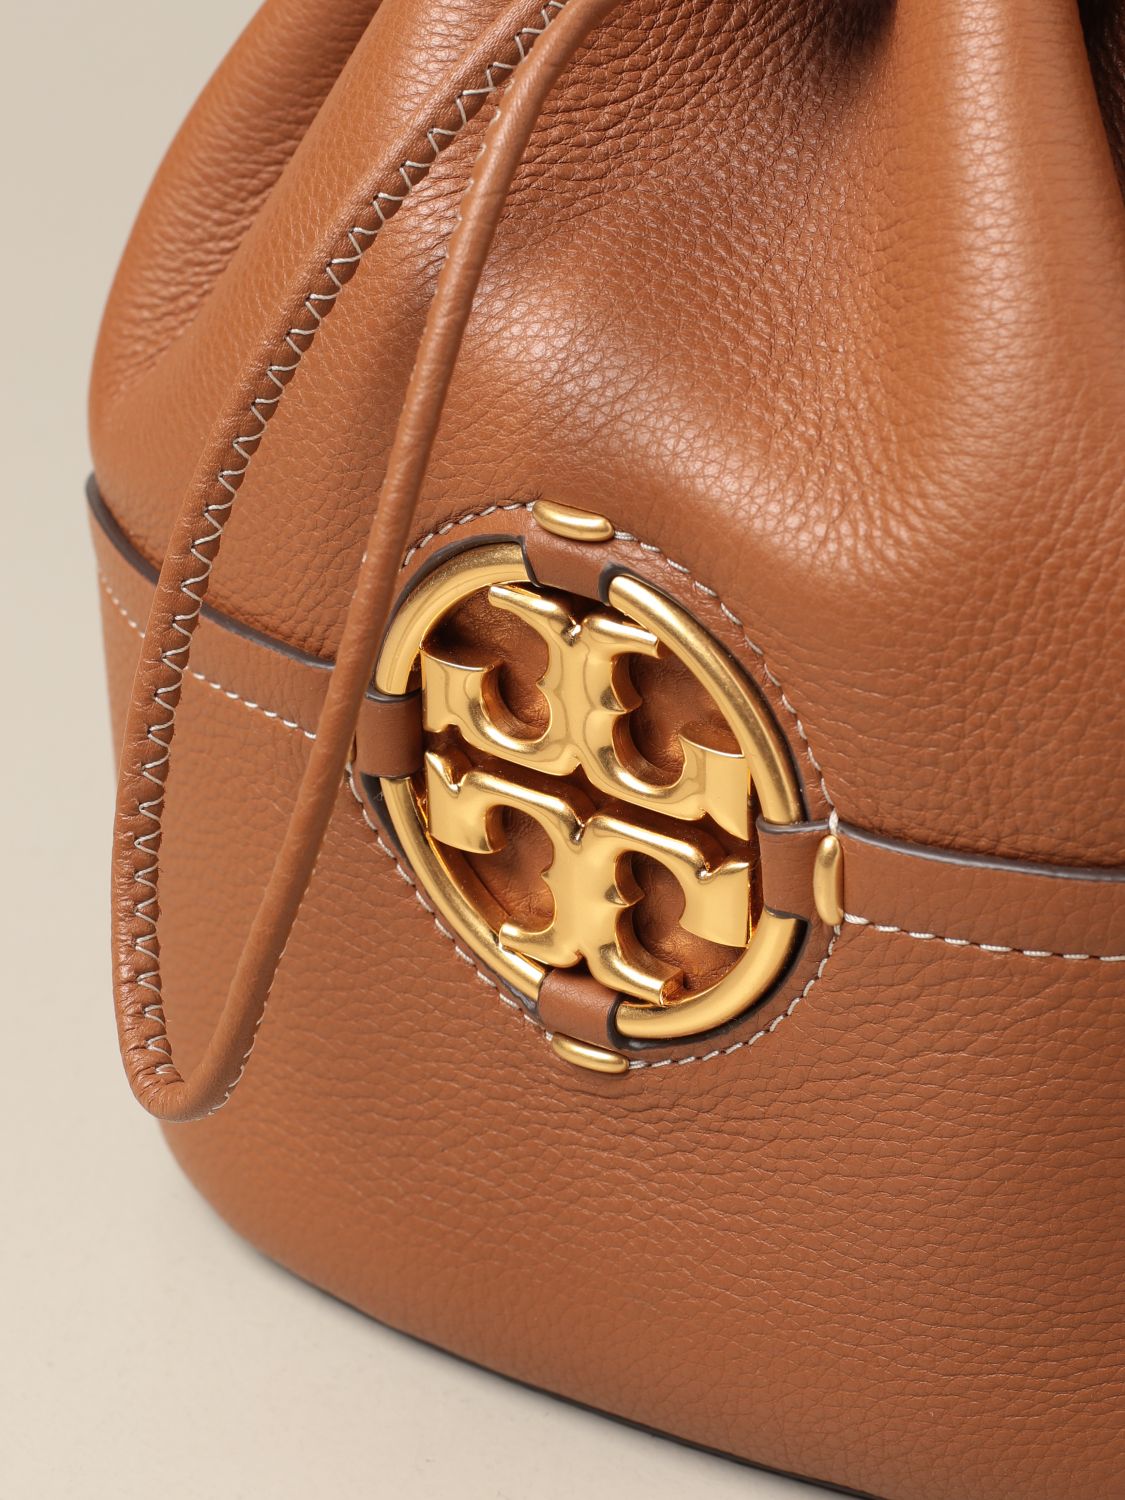 TORY BURCH: Miller bucket bag in grained leather - Brown | Tory Burch  handbag 79323 online on 